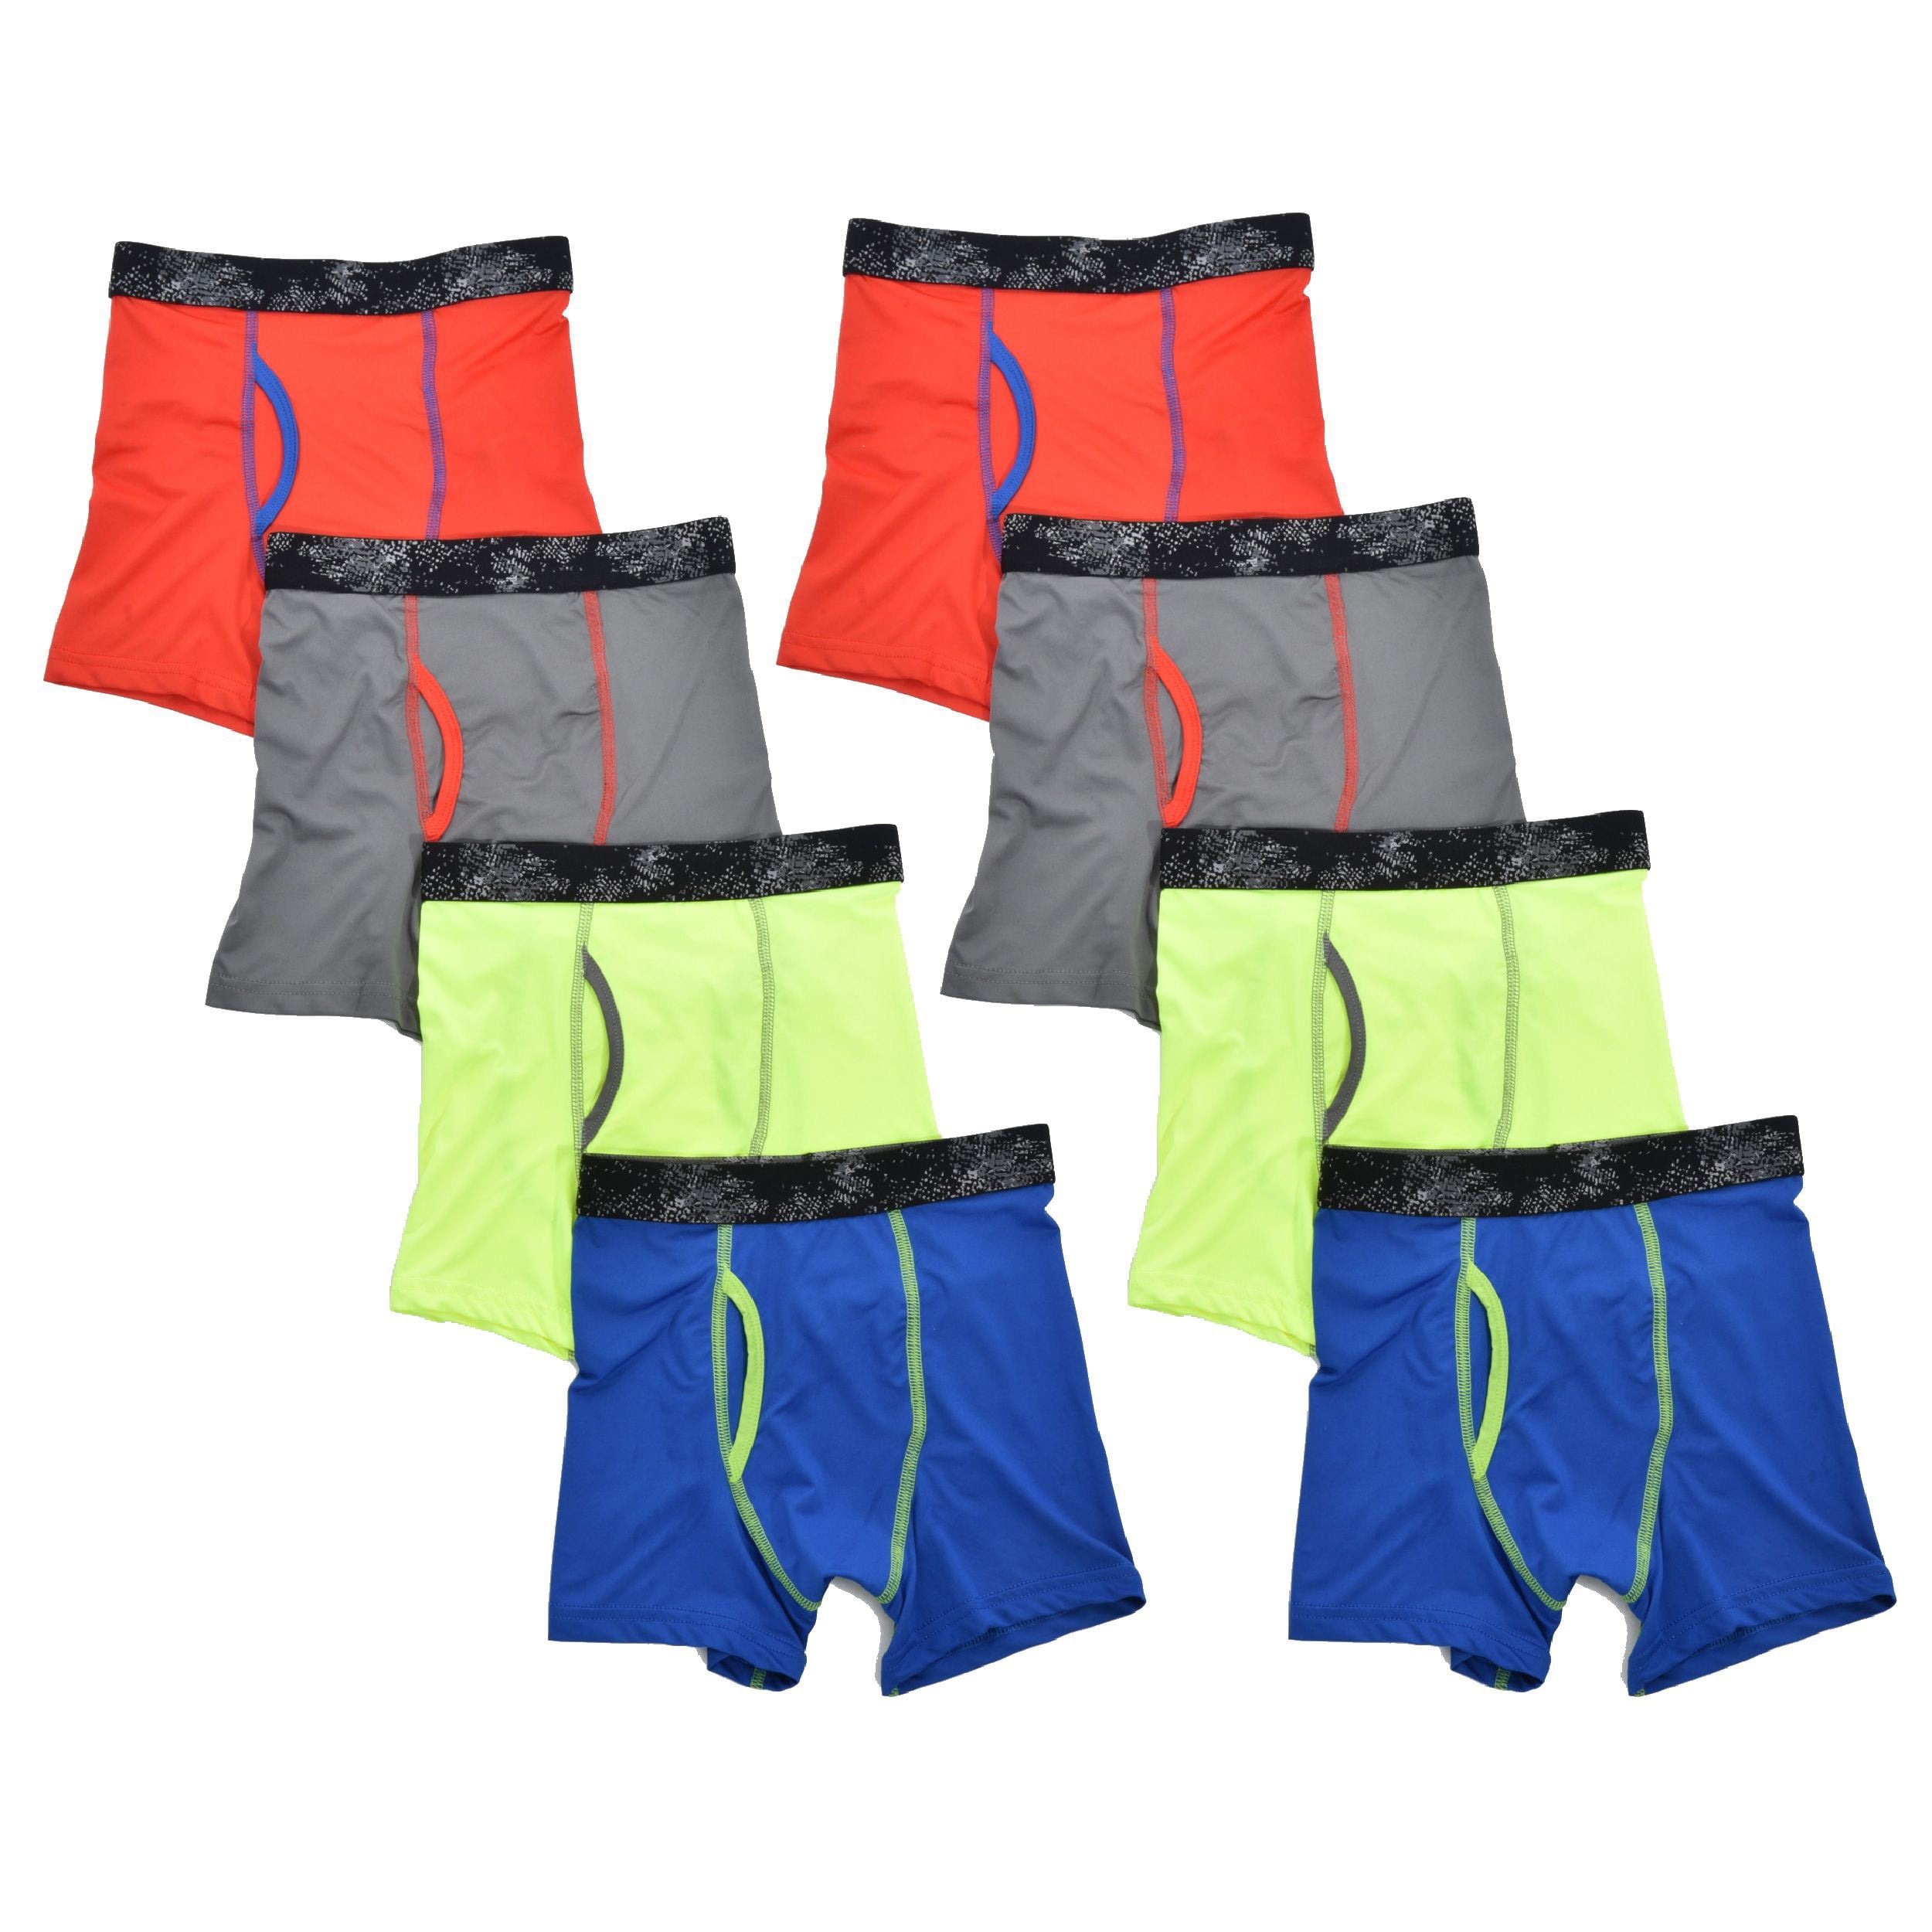 Athletic Works - Athletic Works Boys Underwear, 8 Pack Space Dye Boxer ...